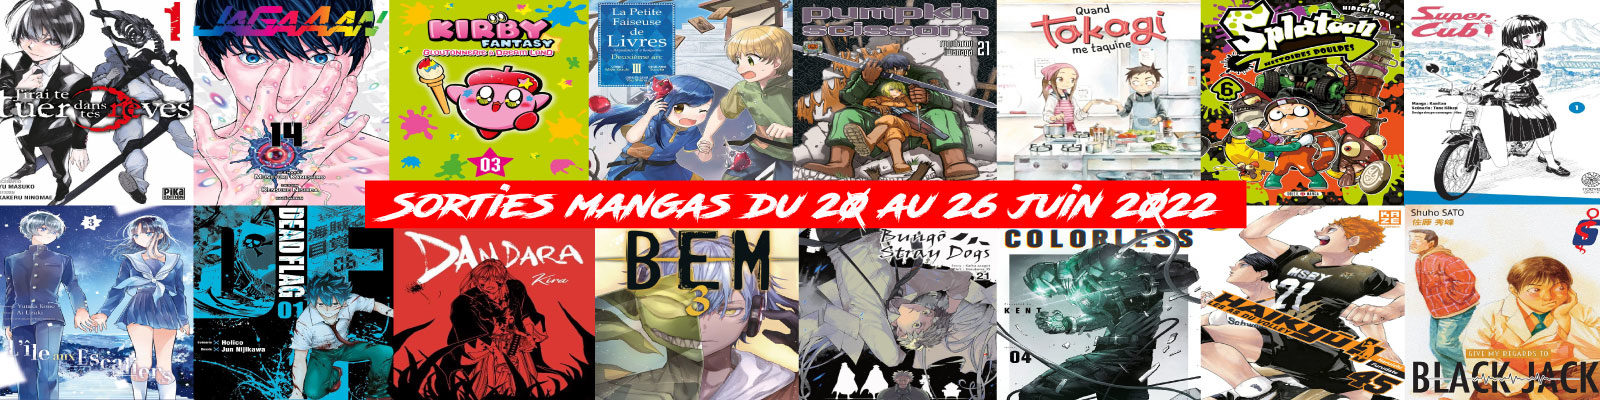 Sorties mangas-du-20-au-26-juin-2022